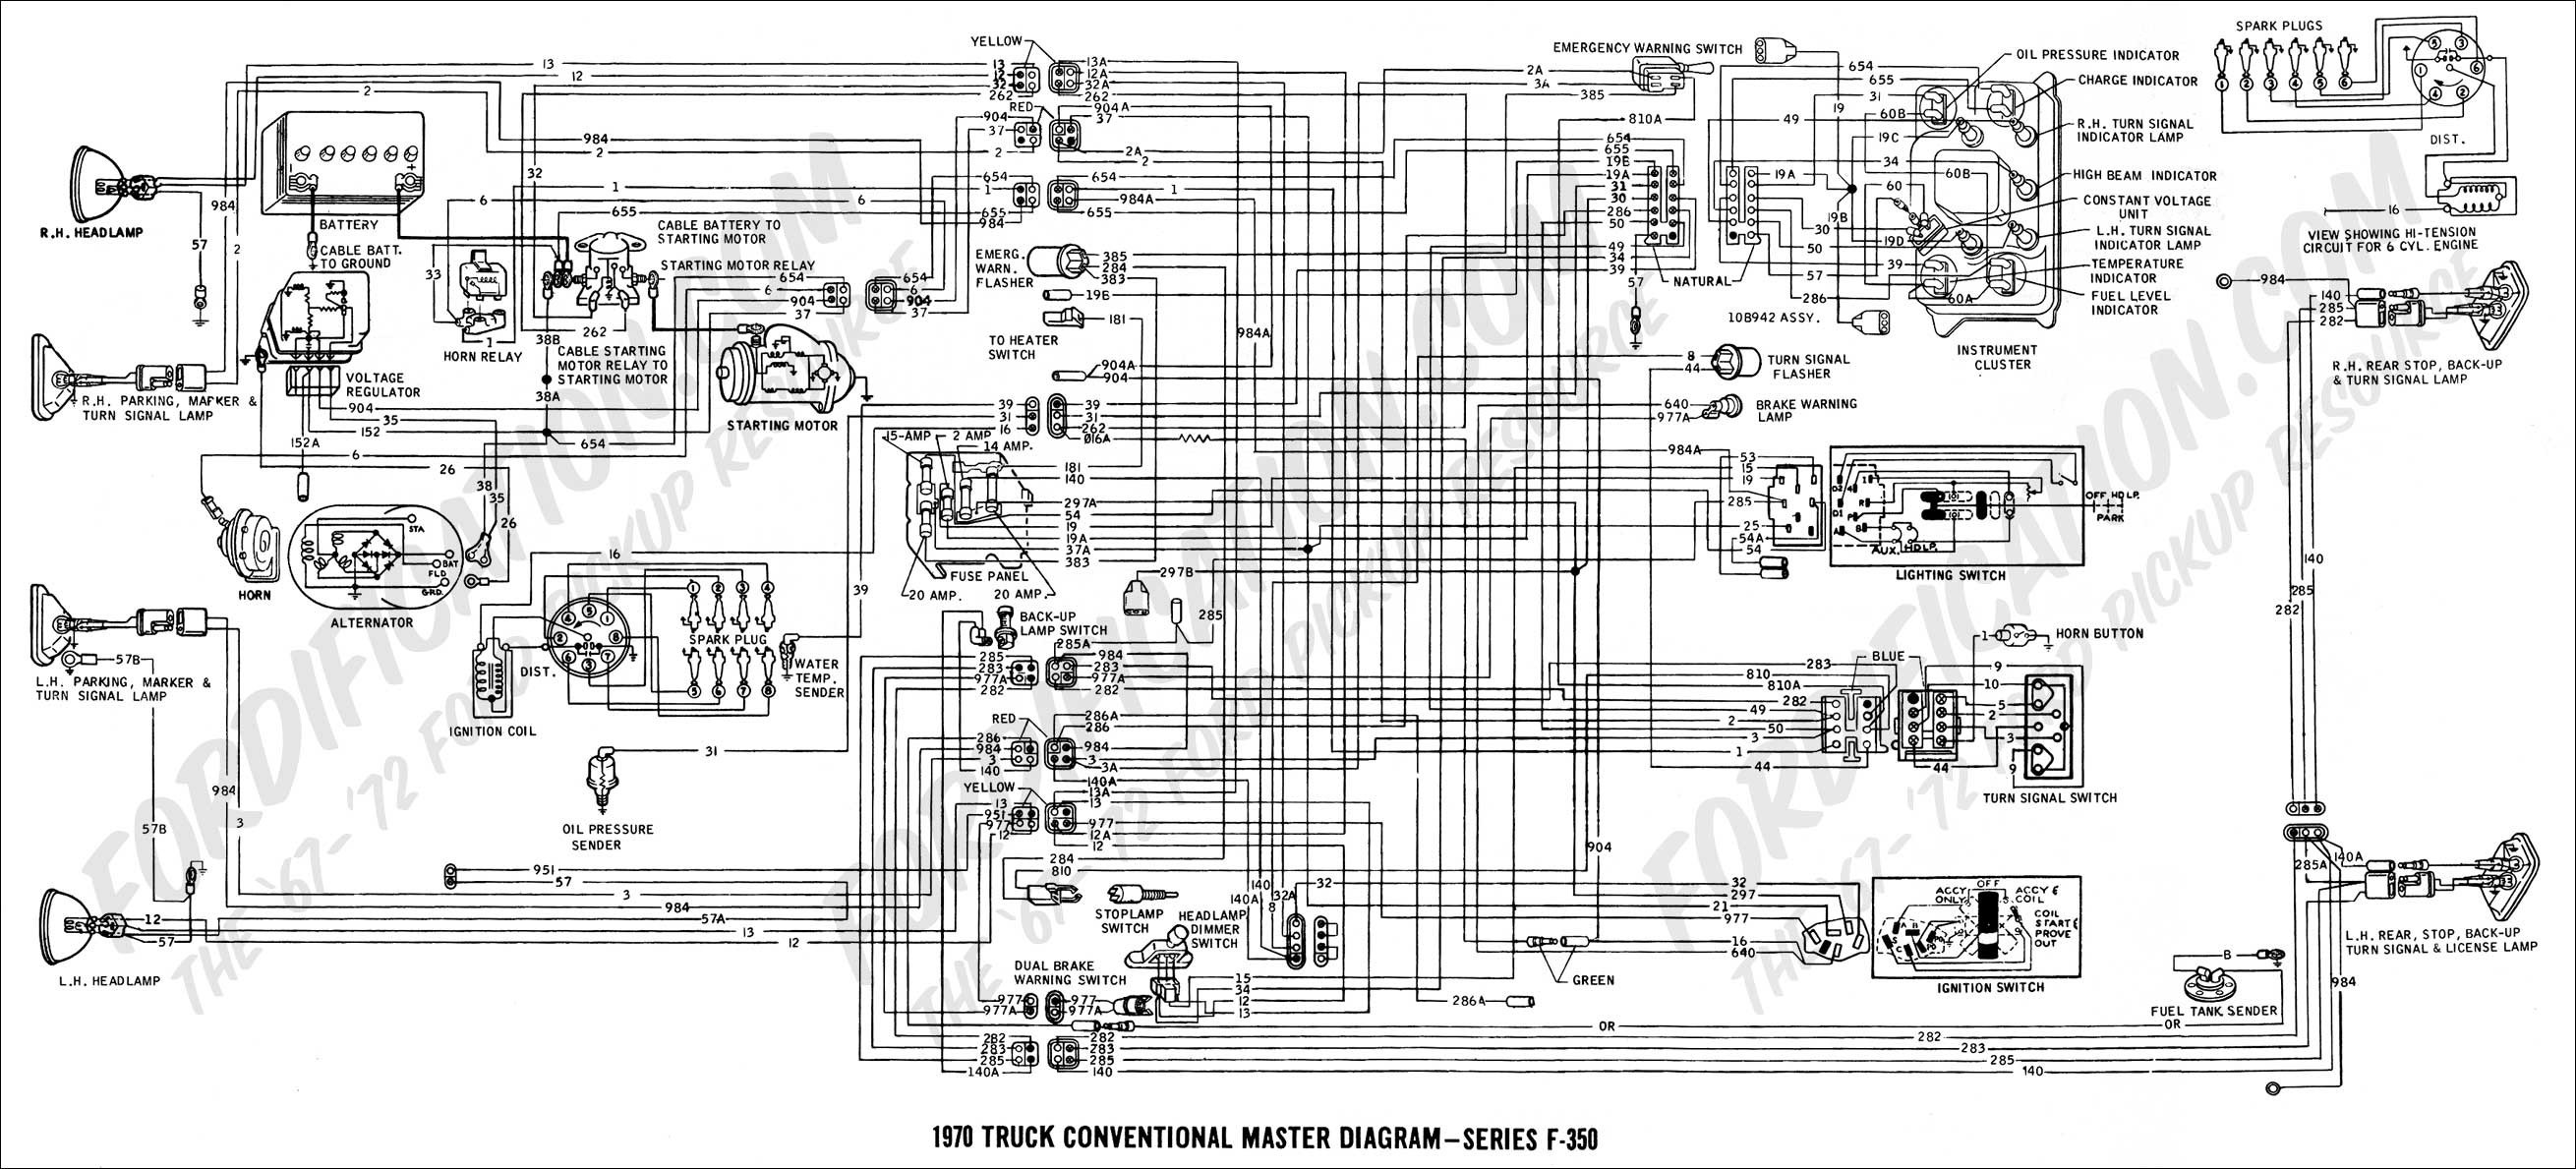 2004 F 250 Charging Wire Diagram 2004 F 250 Lariat Wiring Diagrams 1997 Ford F 150 Wiring Diagram 1992 Ford F 250 Wiring Diagram 1995 Ford F 250 Wiring